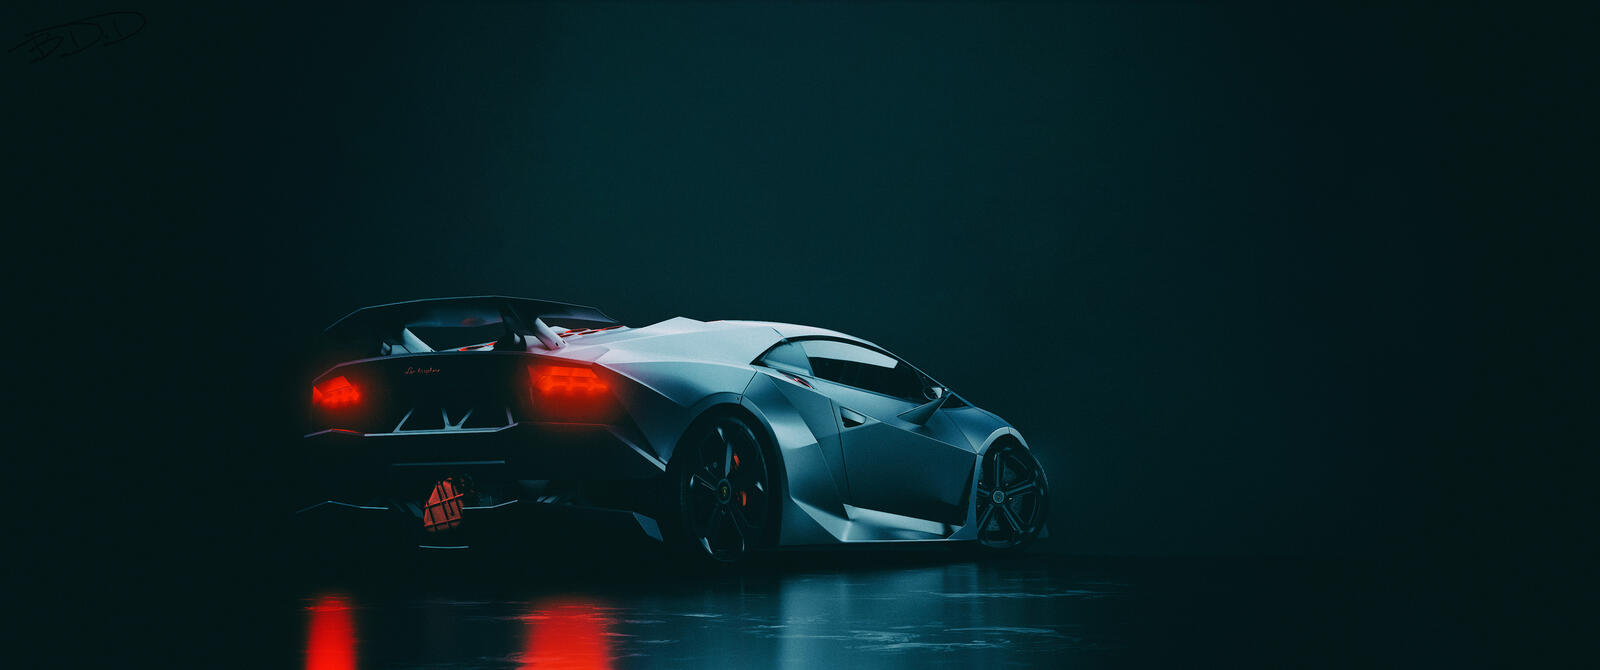 Free photo The back of a Lamborghini in the dark.